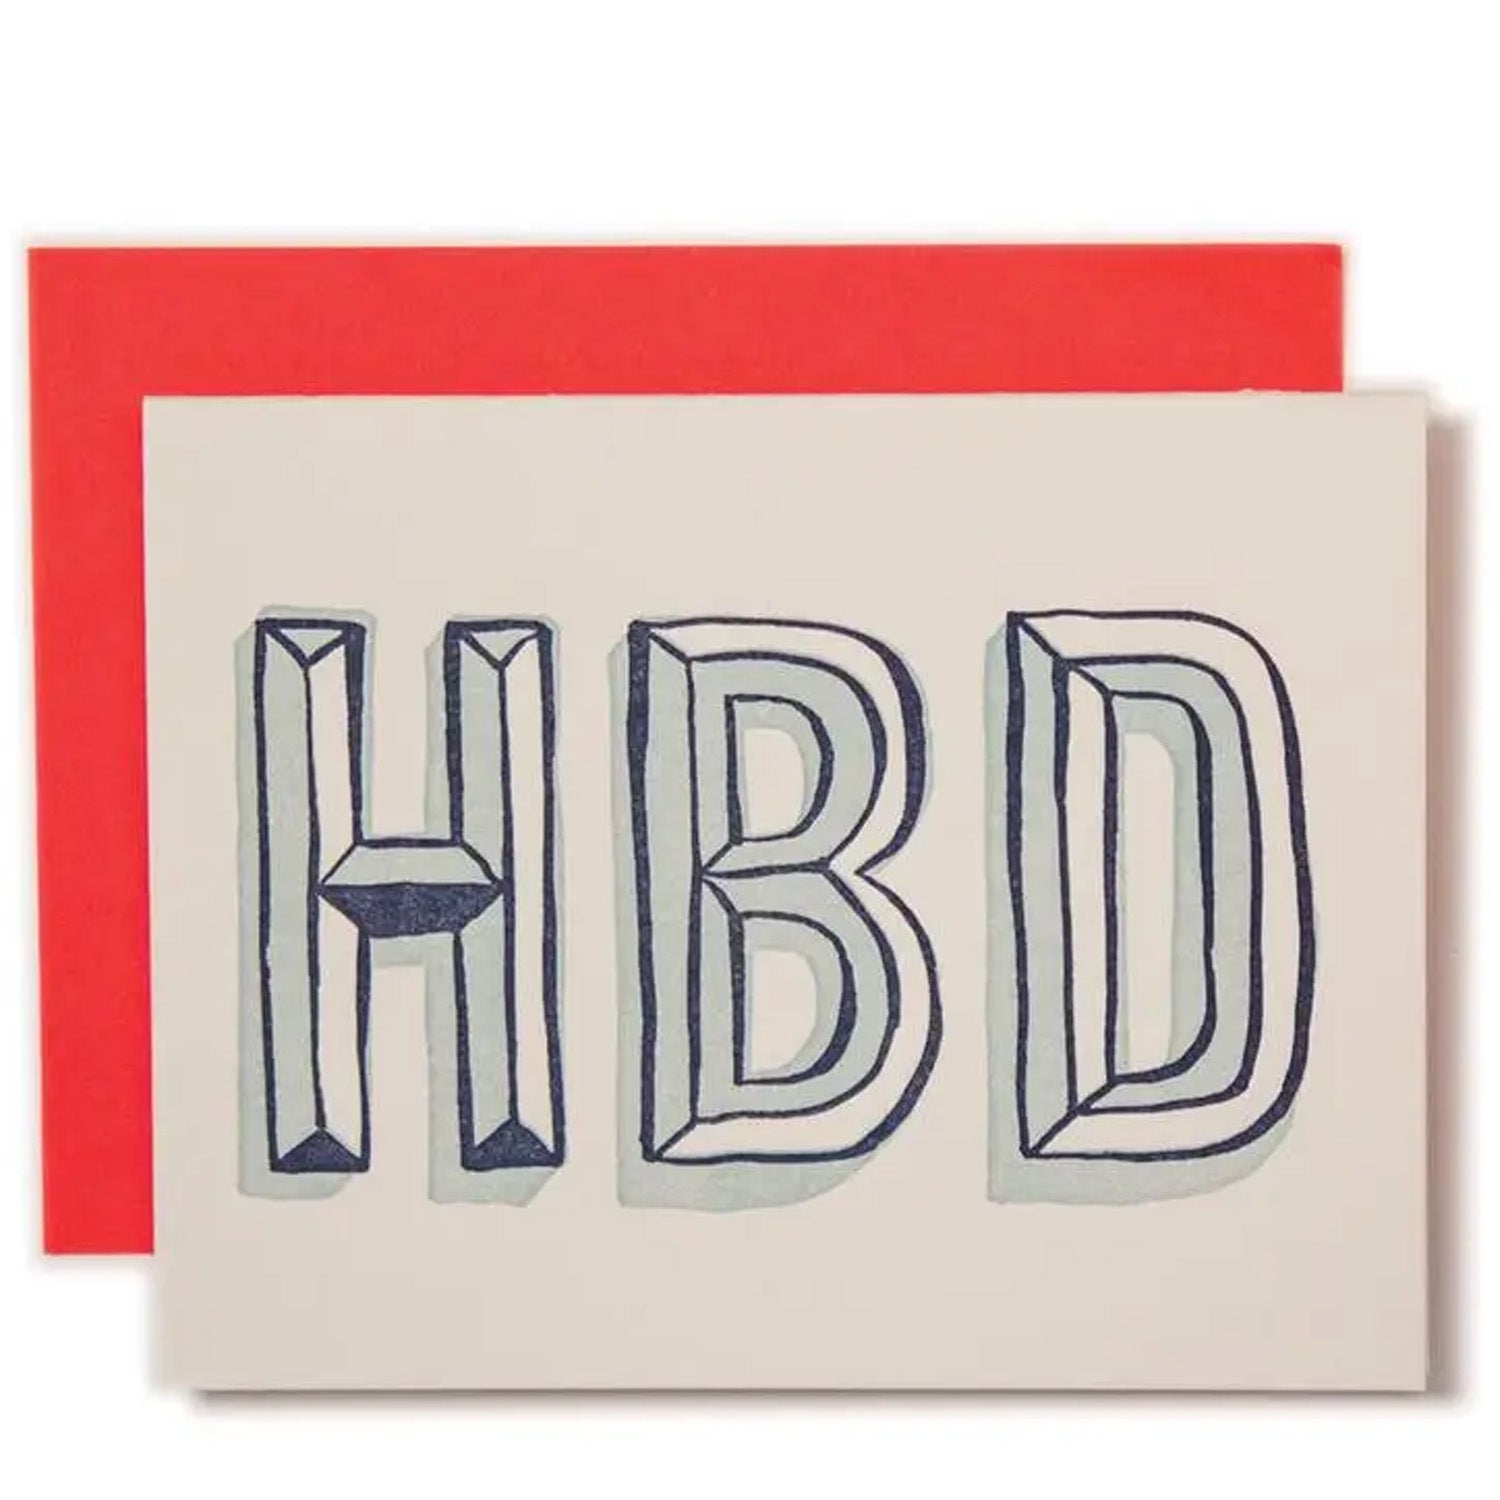 HBD : greeting card